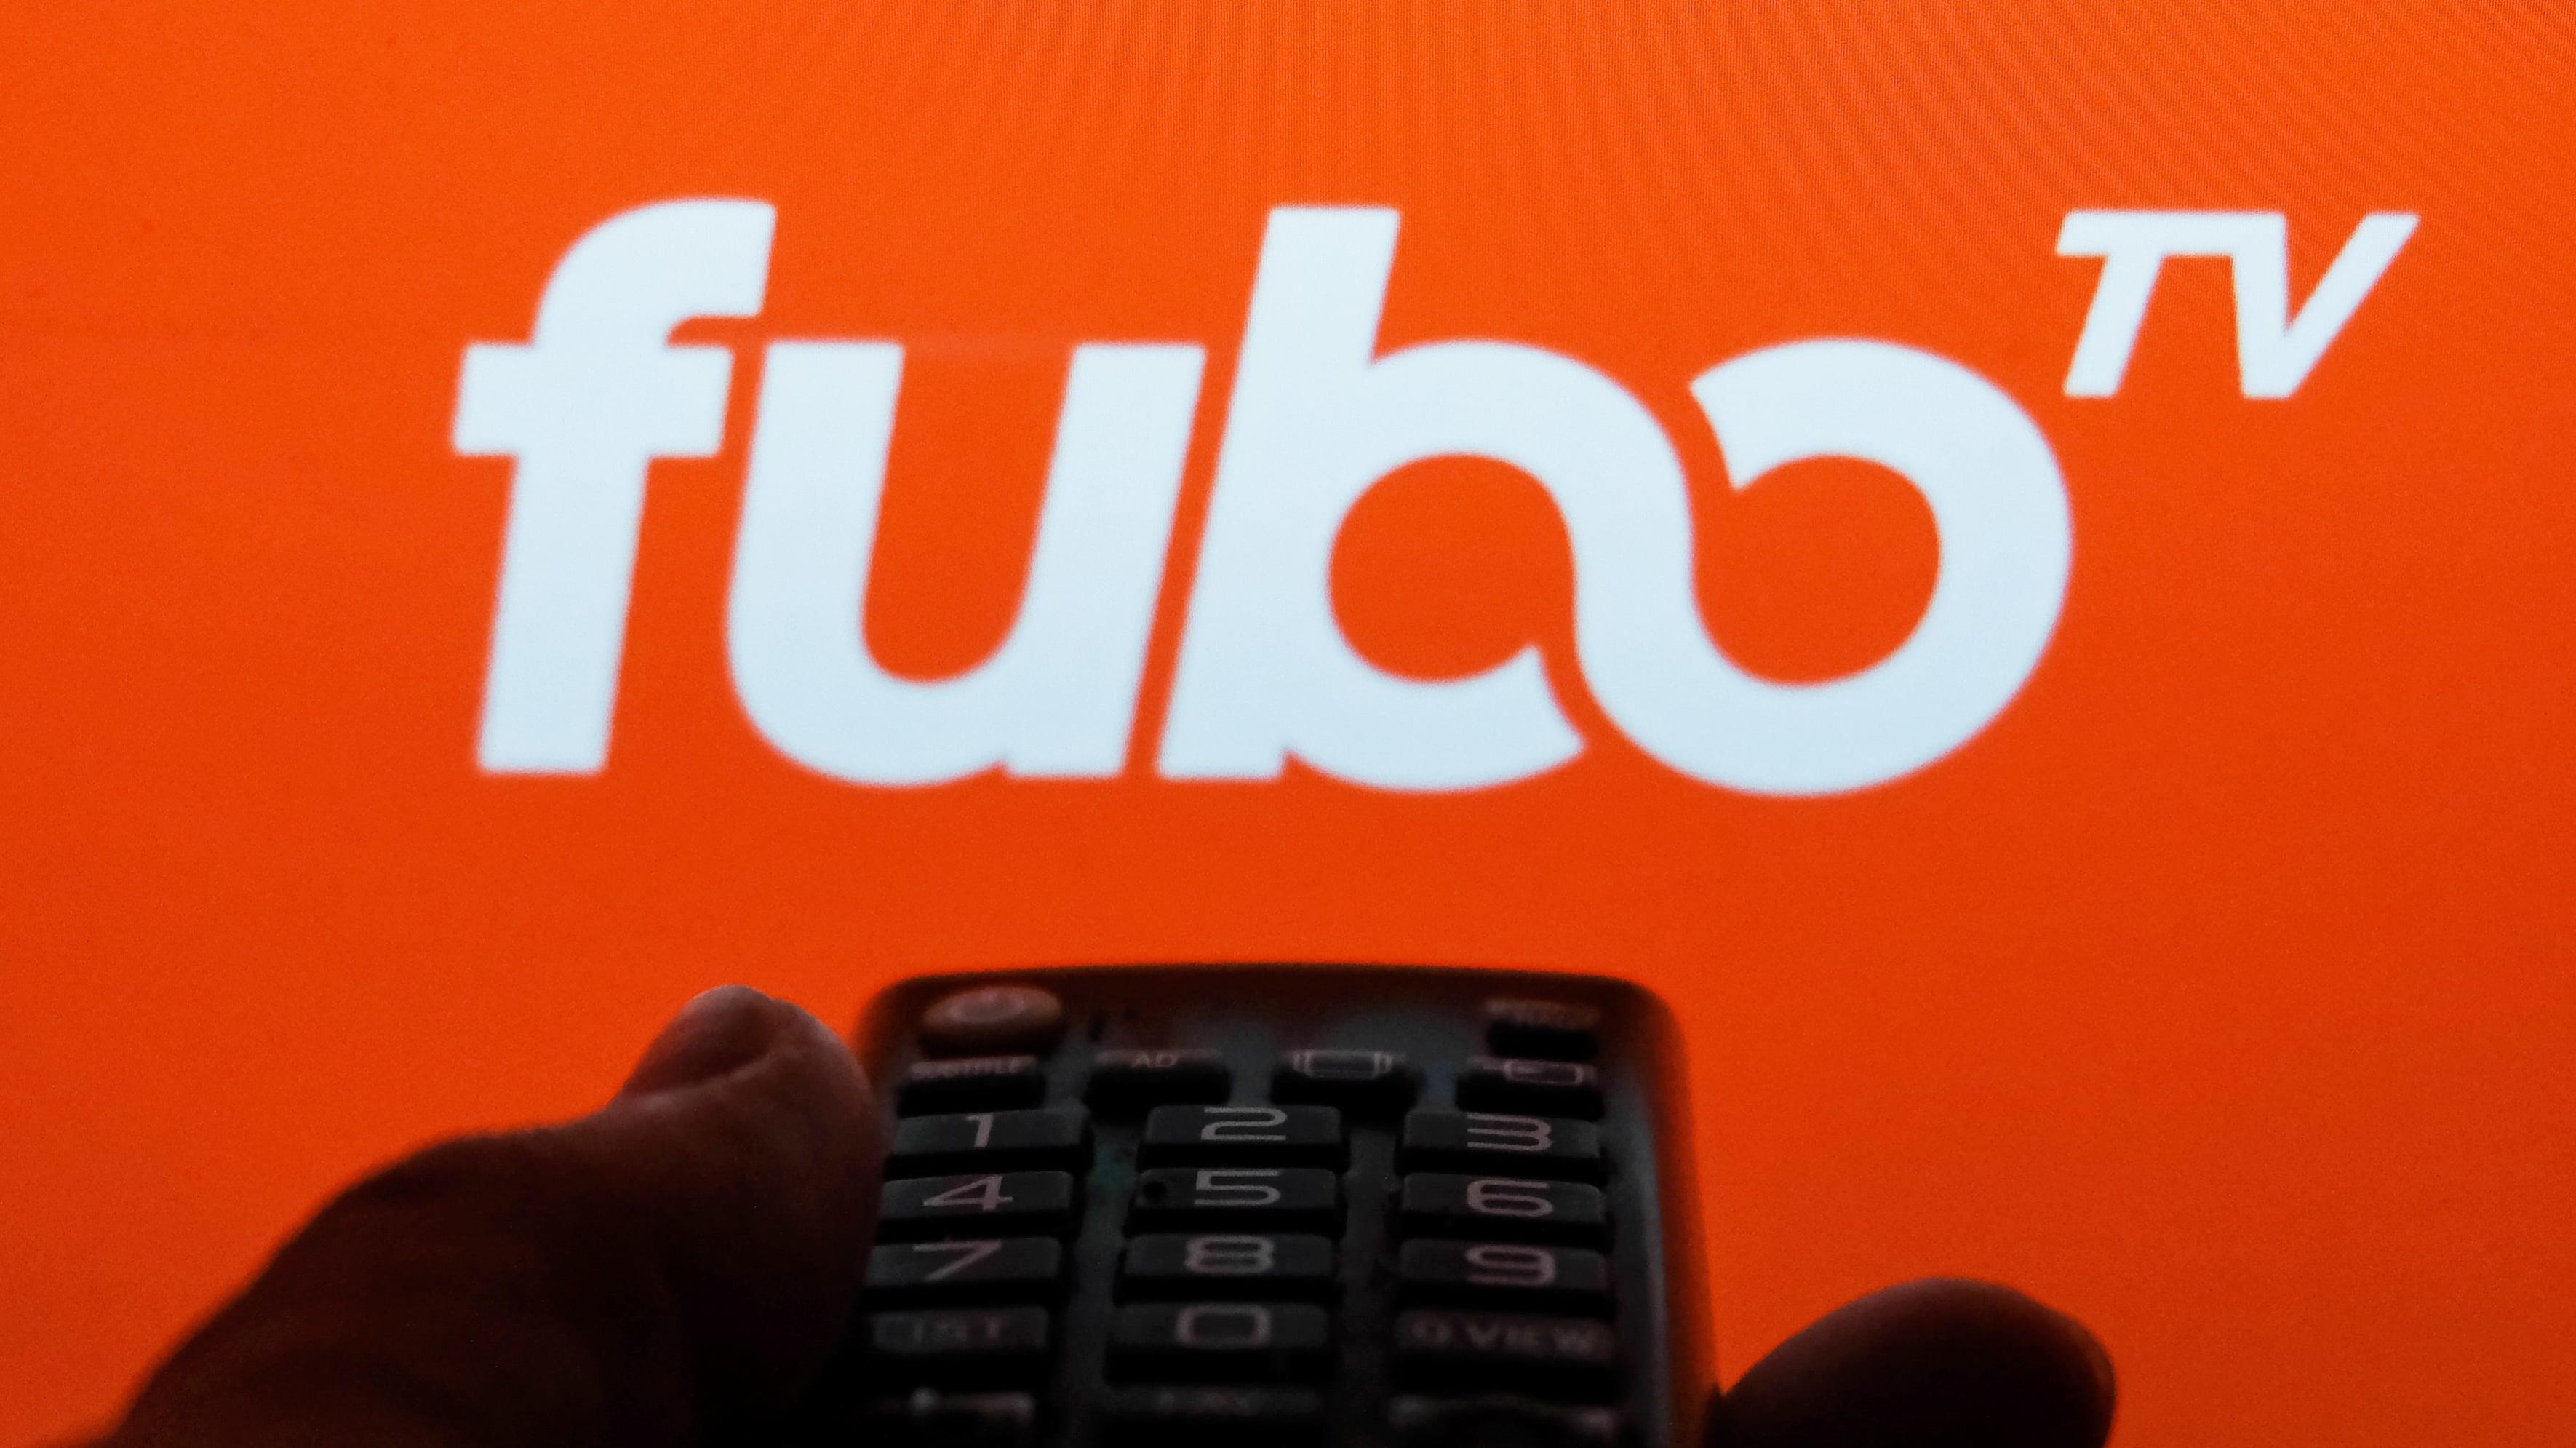 FuboTV stock pops on Wedbush upgrade